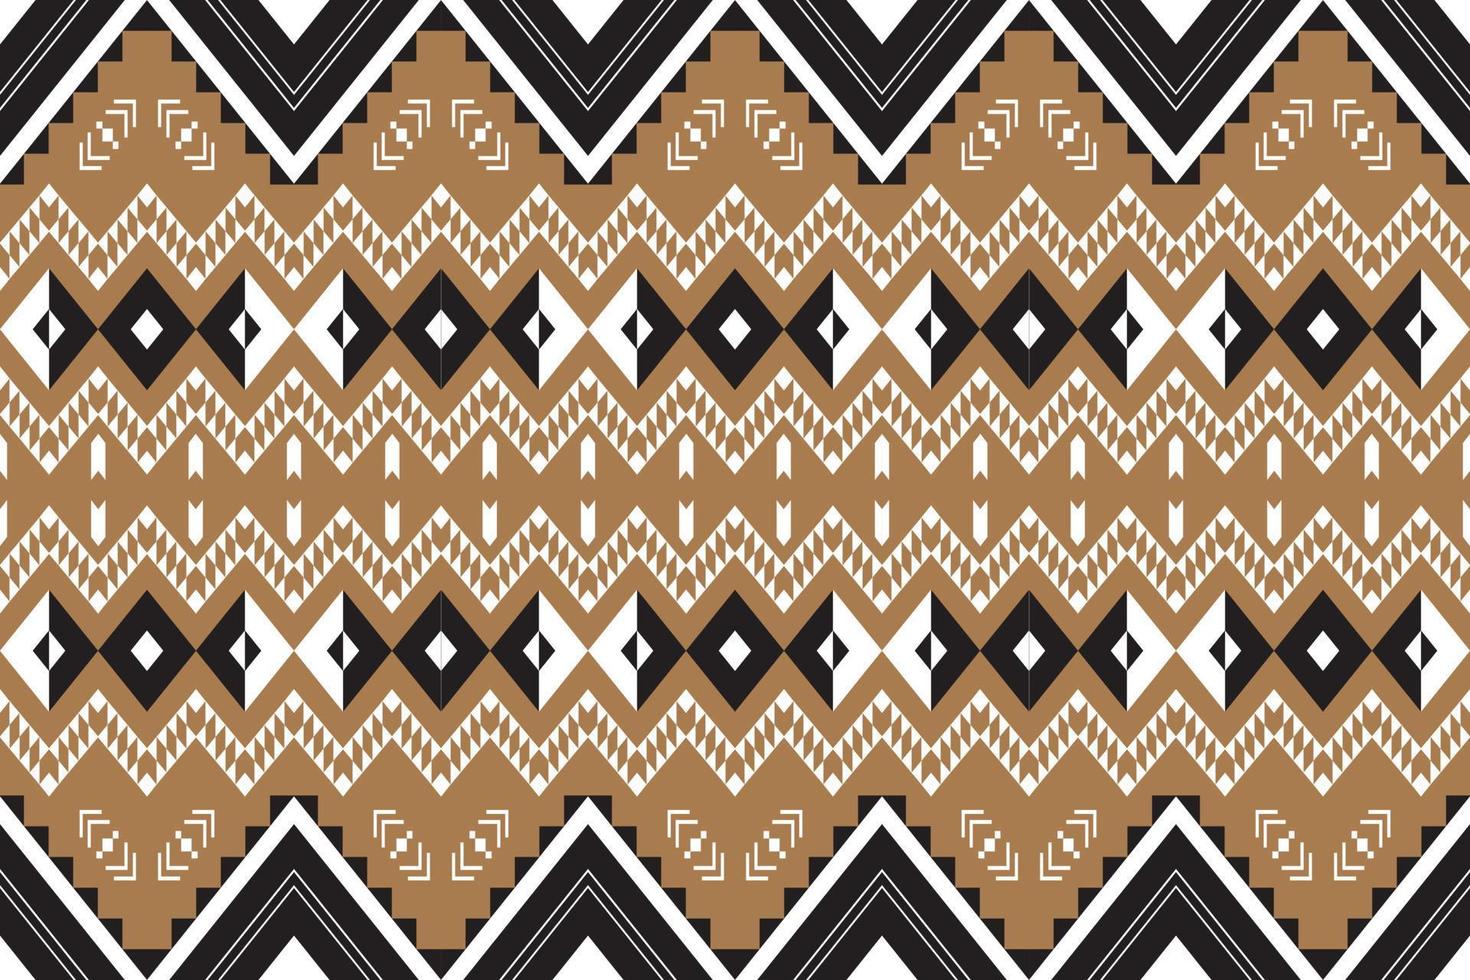 geométrico étnico tribal vintage desatado padronizar. aplicado tradicional Projeto para fundo, tapete, papel de parede, roupas, invólucro, batik, tecido, moda Projeto. vetor ilustração bordado estilo.